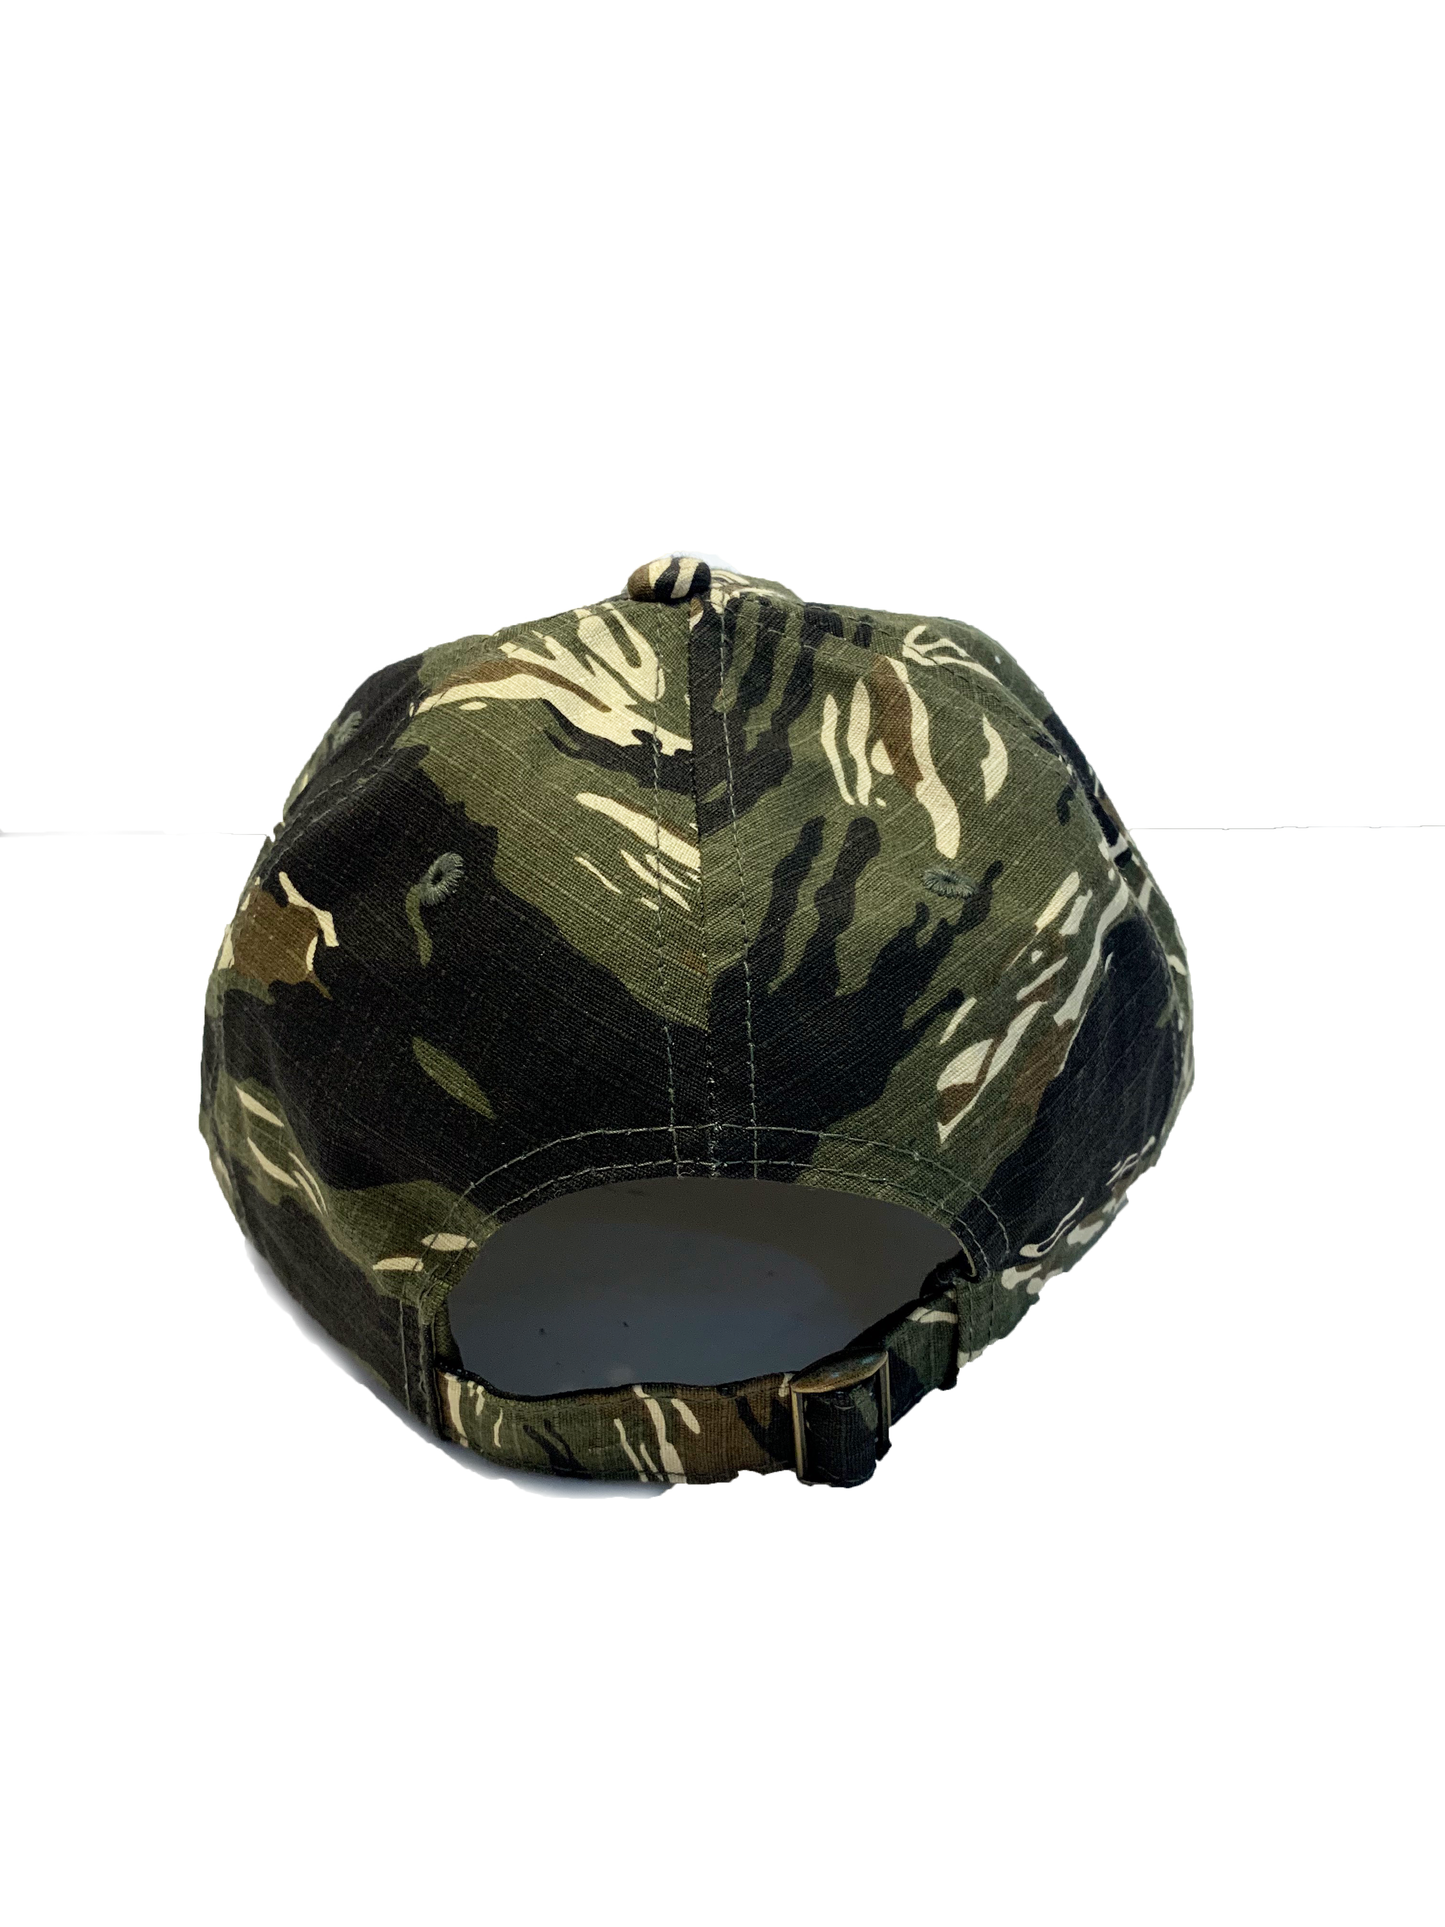 Simulated Tiger Camo Hat